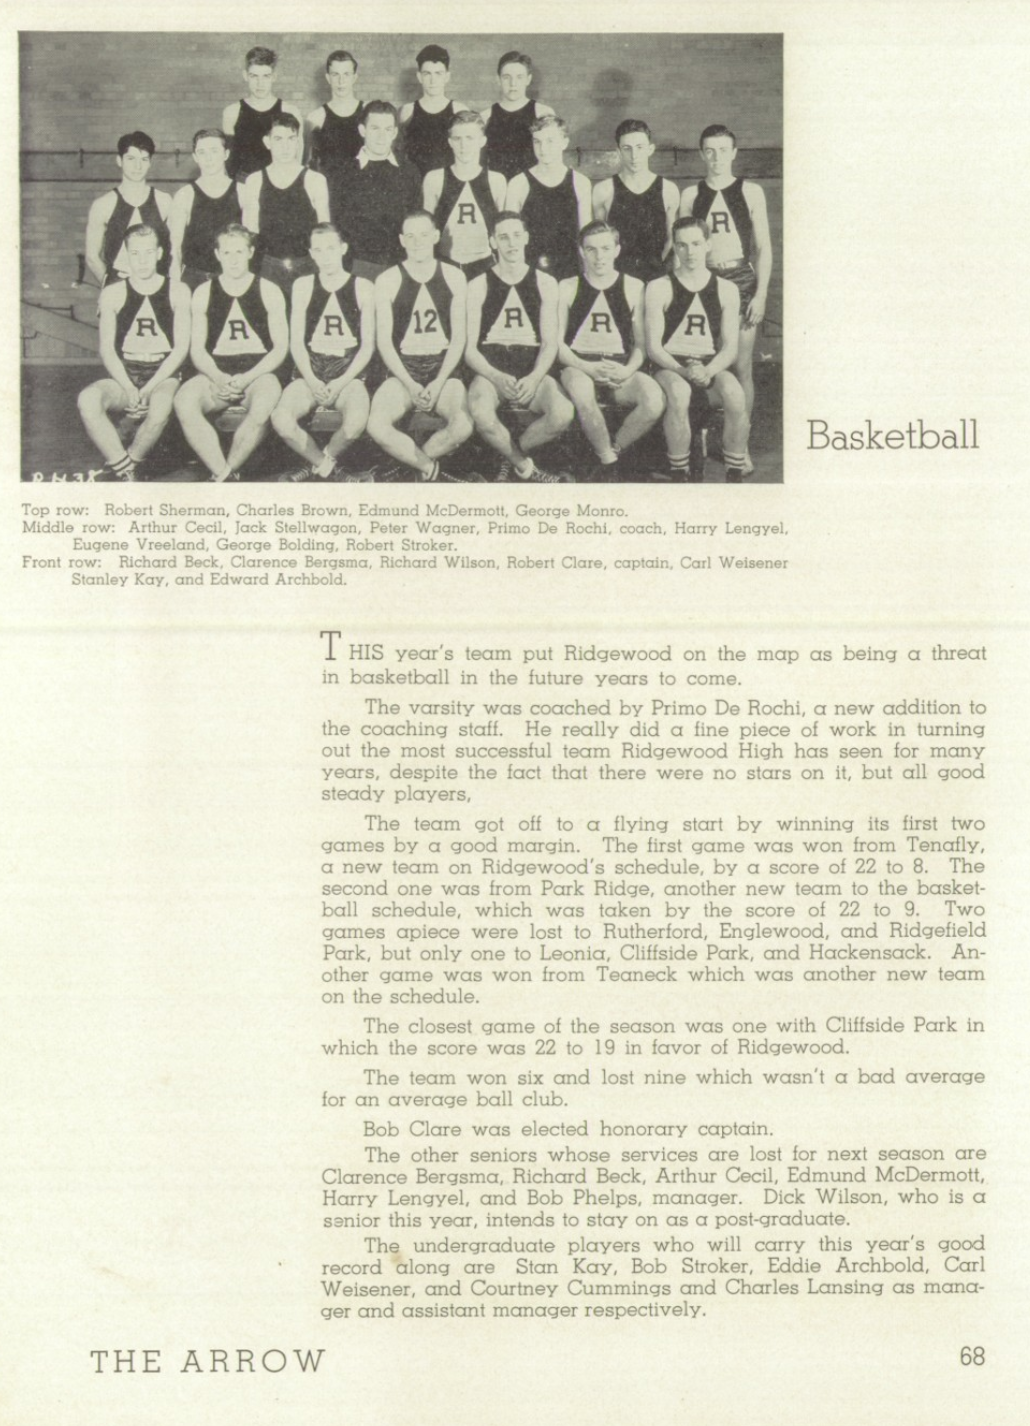 1937 Boys’ Basketball Team